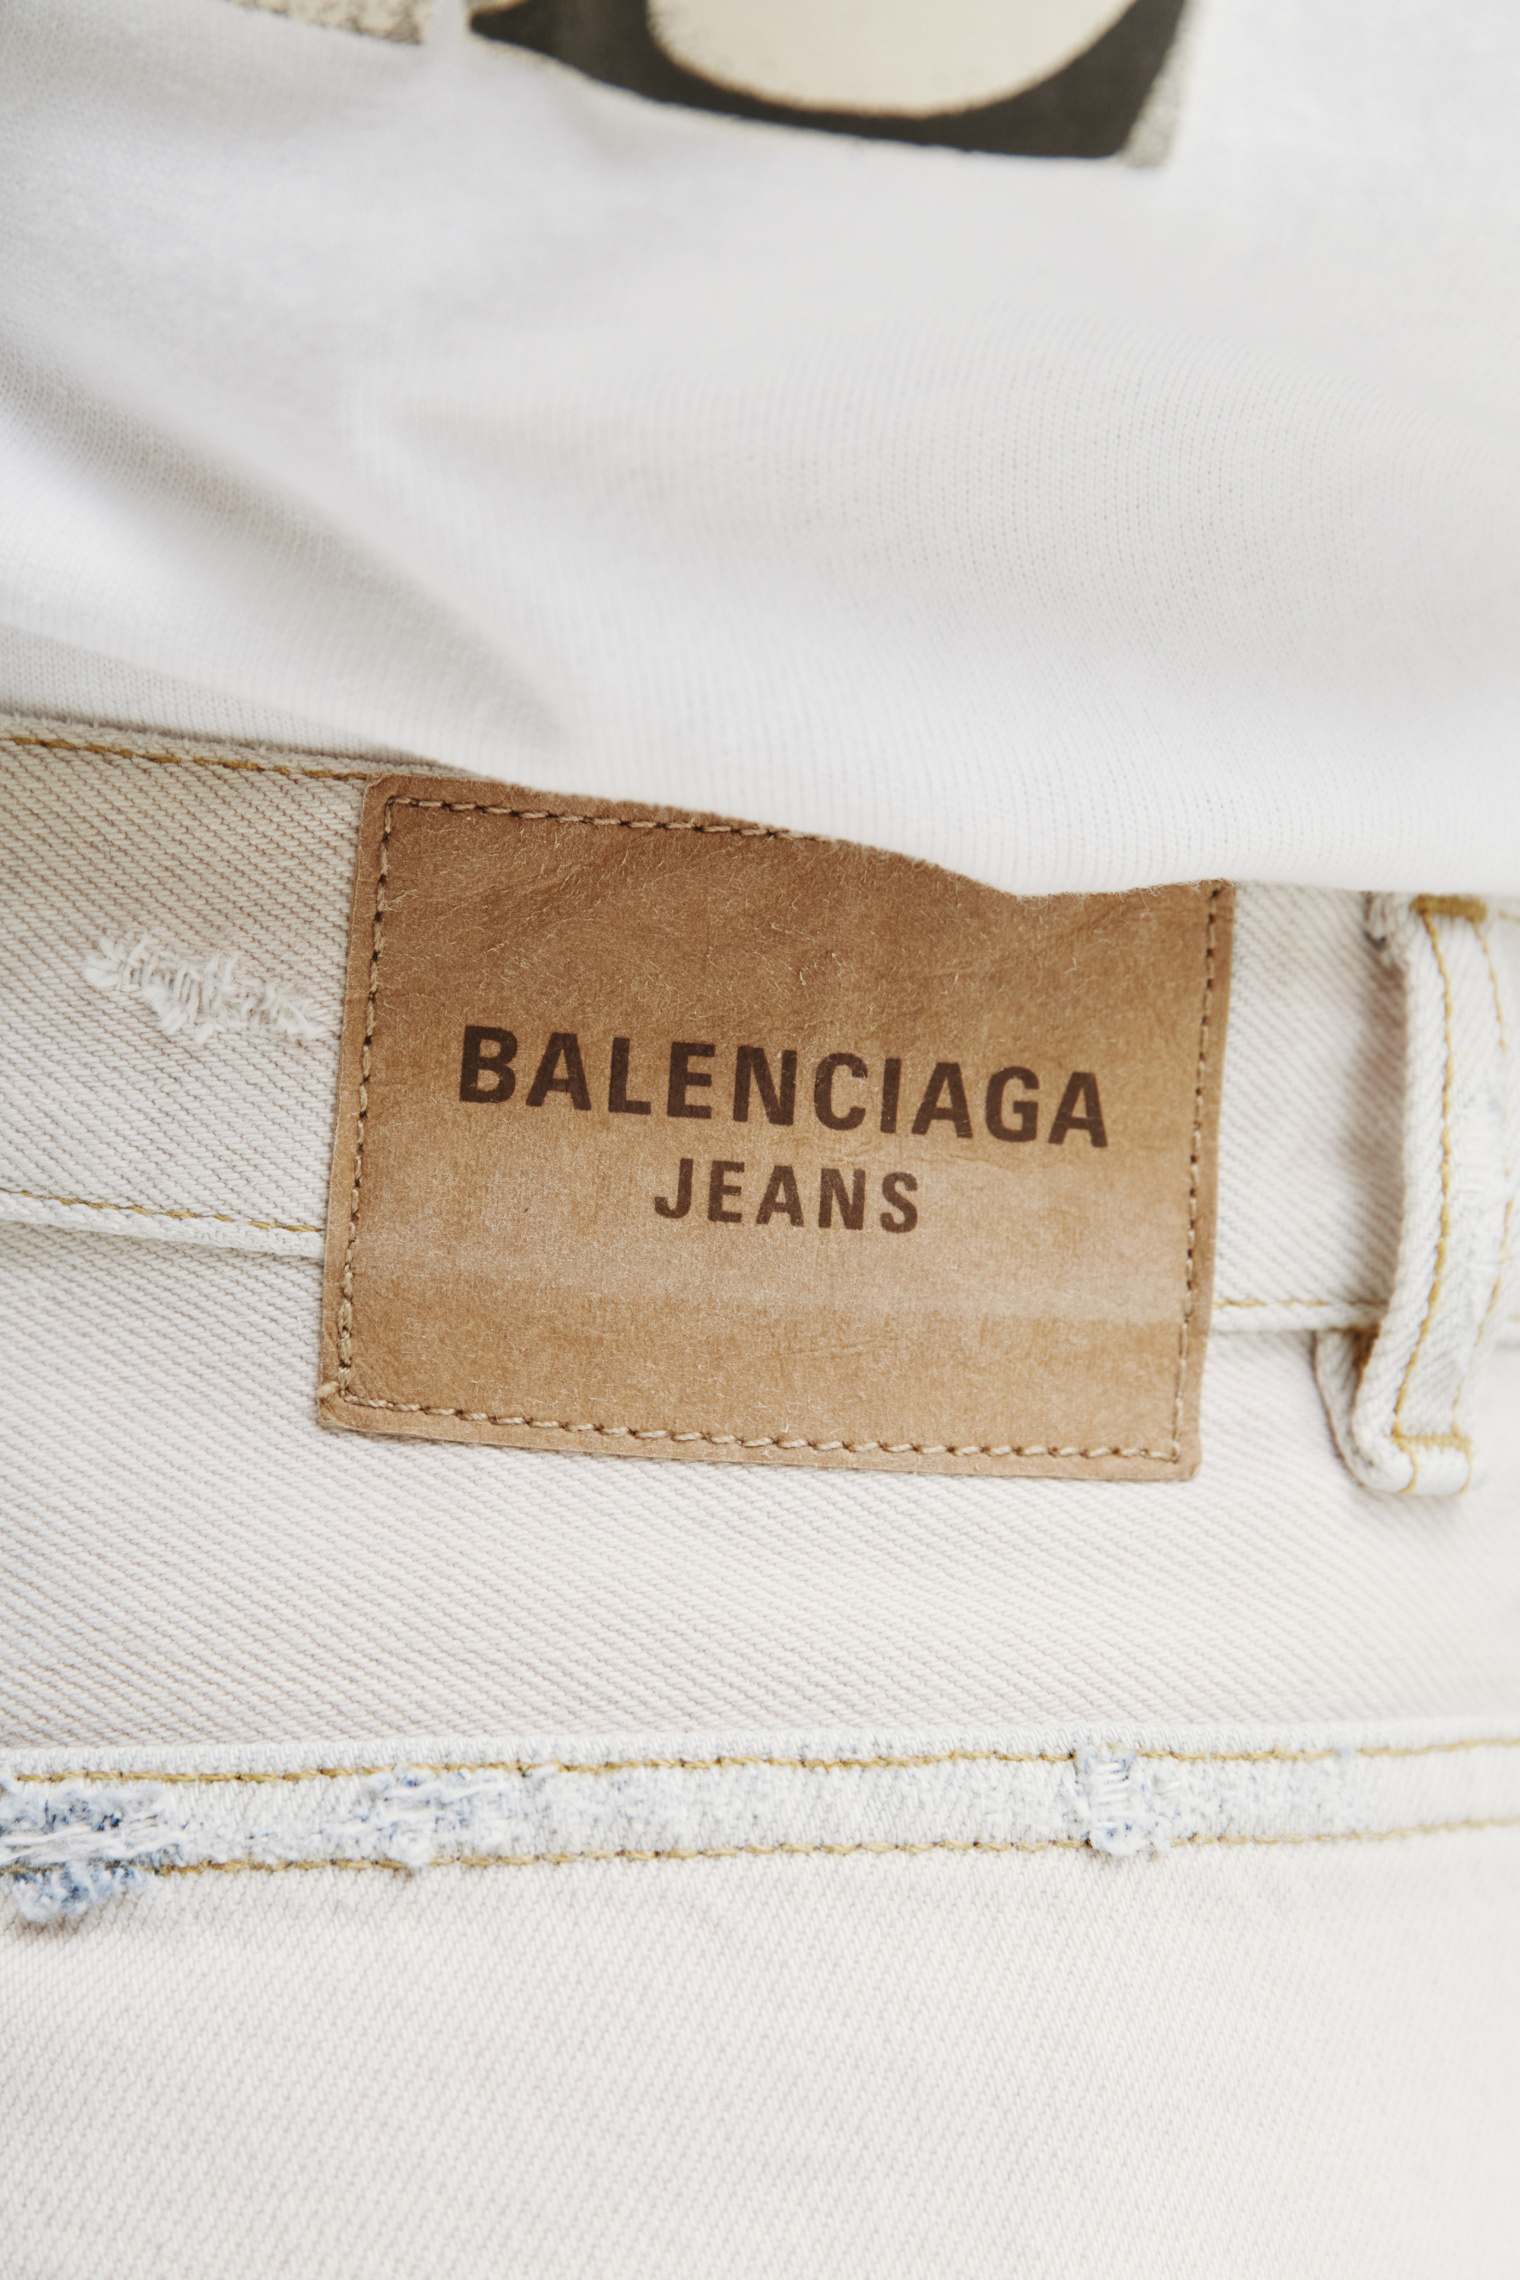 Balenciaga Beige Loose Fit Jeans